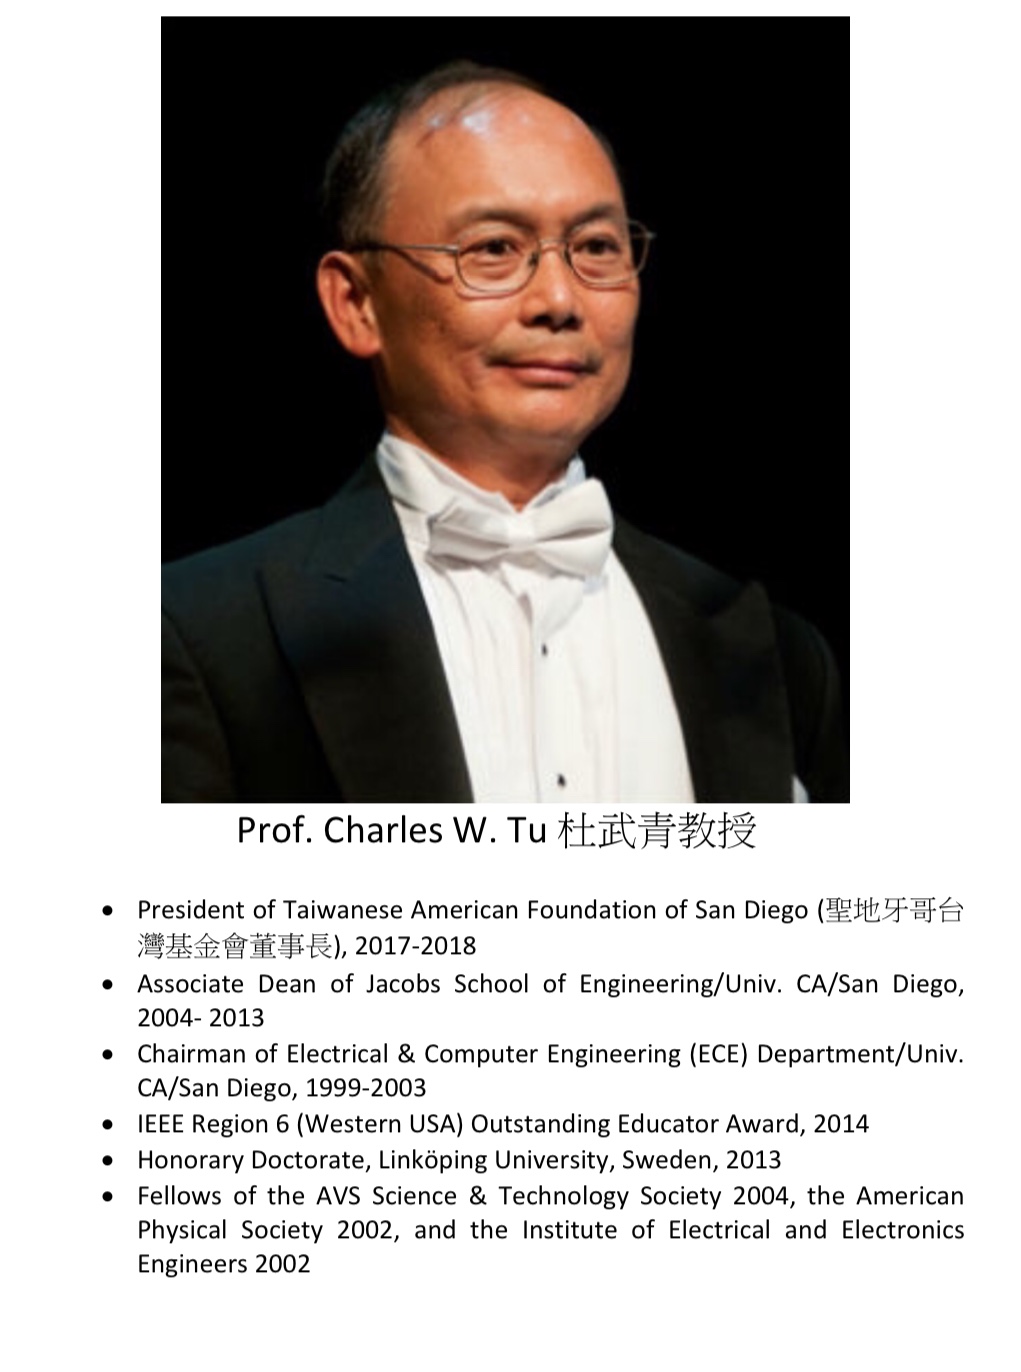 247. Prof. Charles W. Tu 杜武青教授